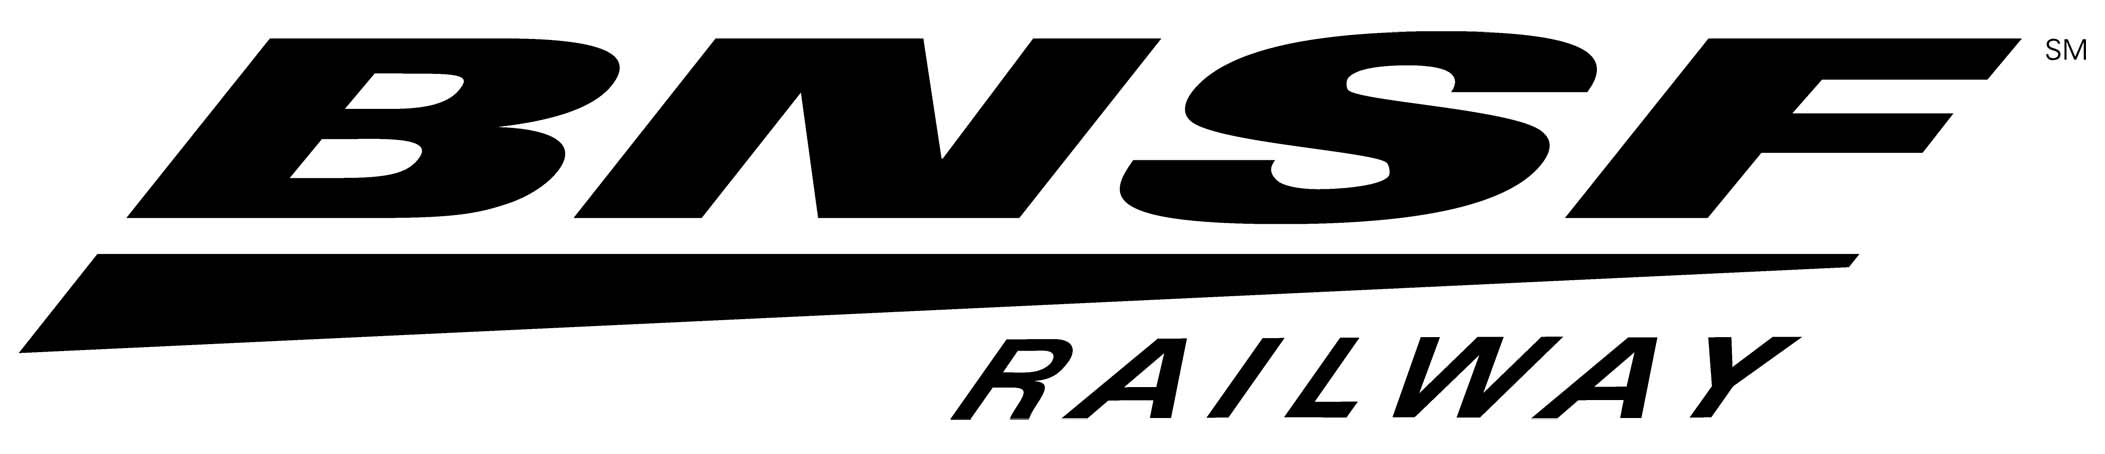 BNSF Logo - Index of /Images